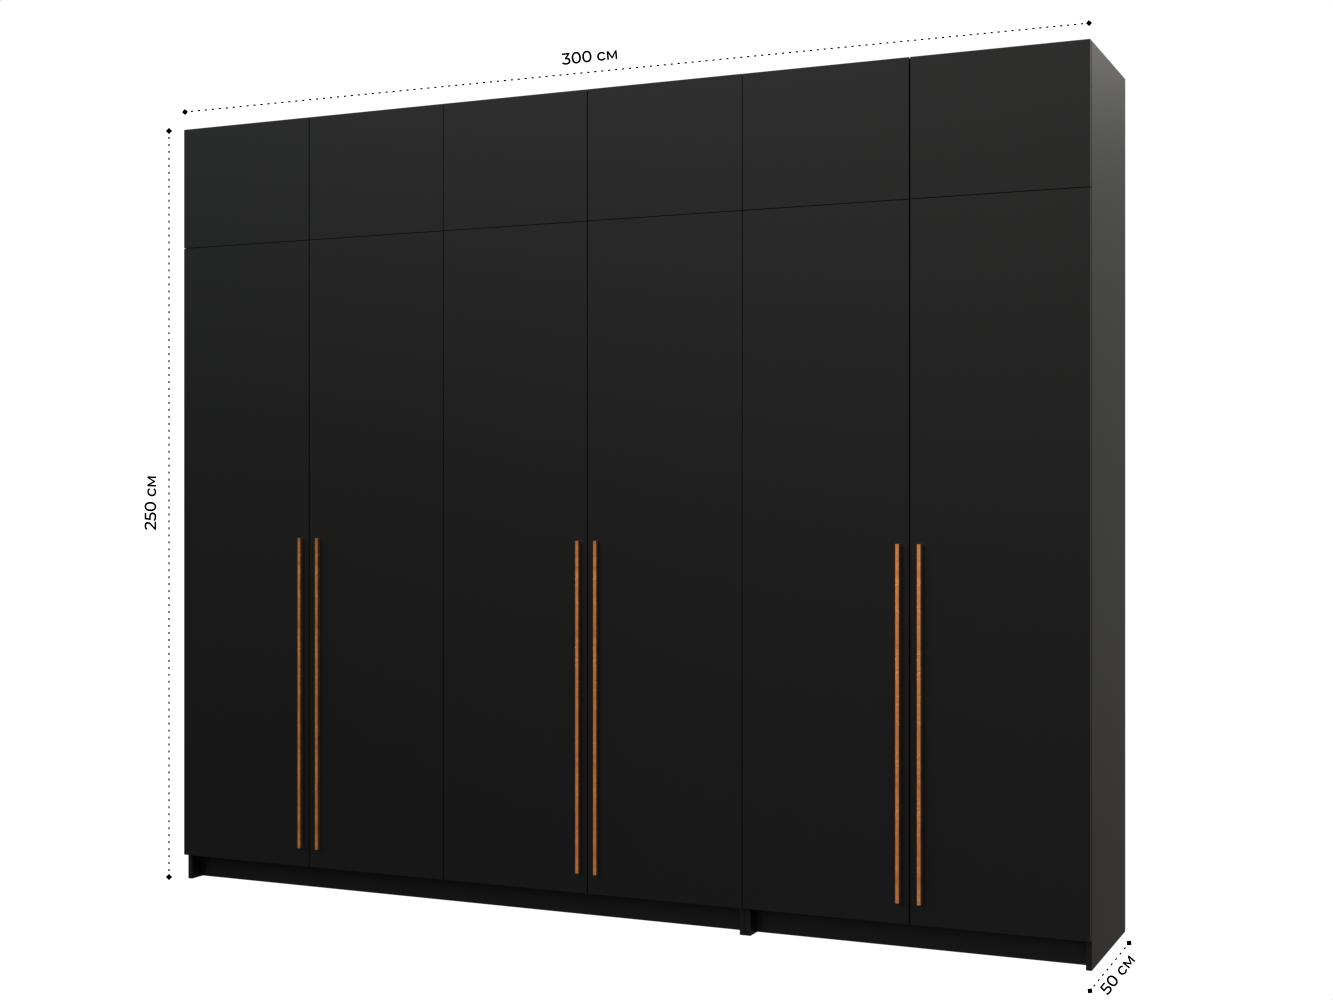 Распашной шкаф Пакс Фардал 101 black ИКЕА (IKEA) изображение товара